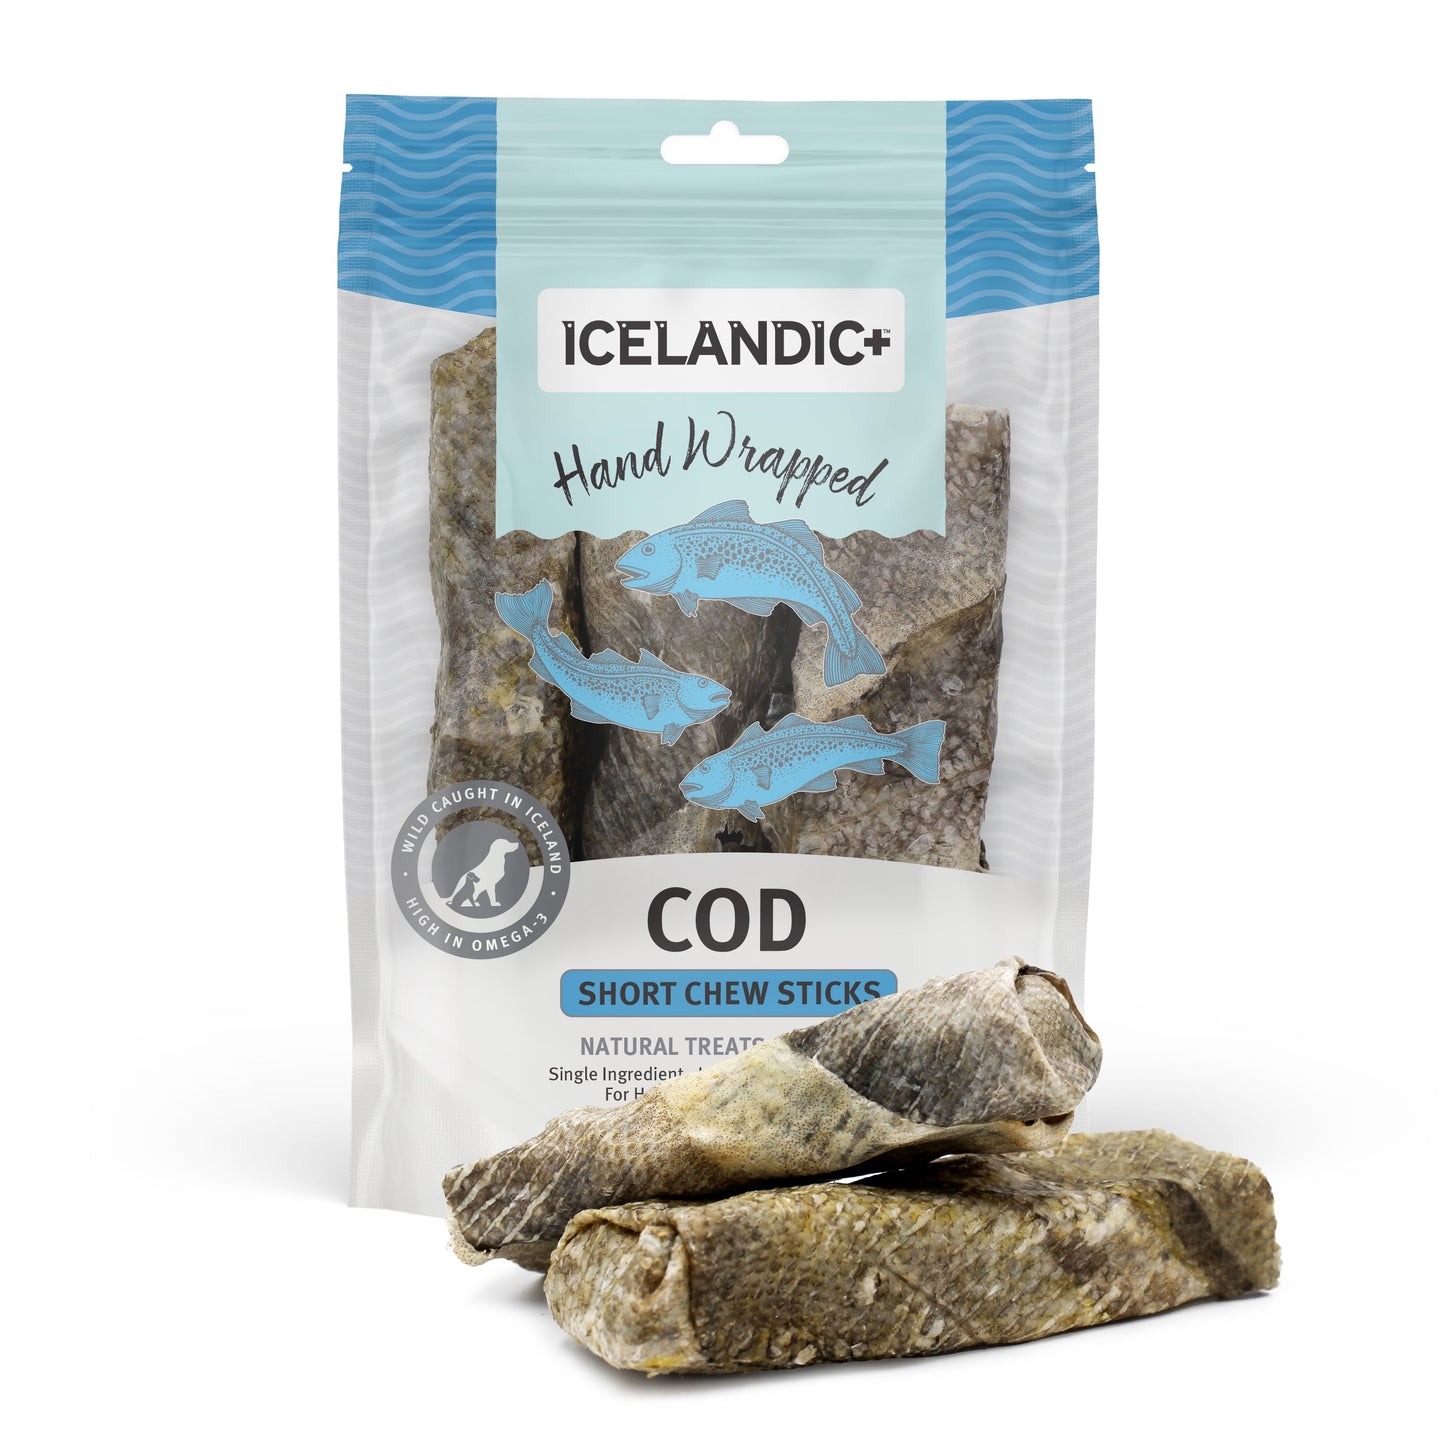 Icelandic+ Hand Wrapped Cod Short Chew Sticks